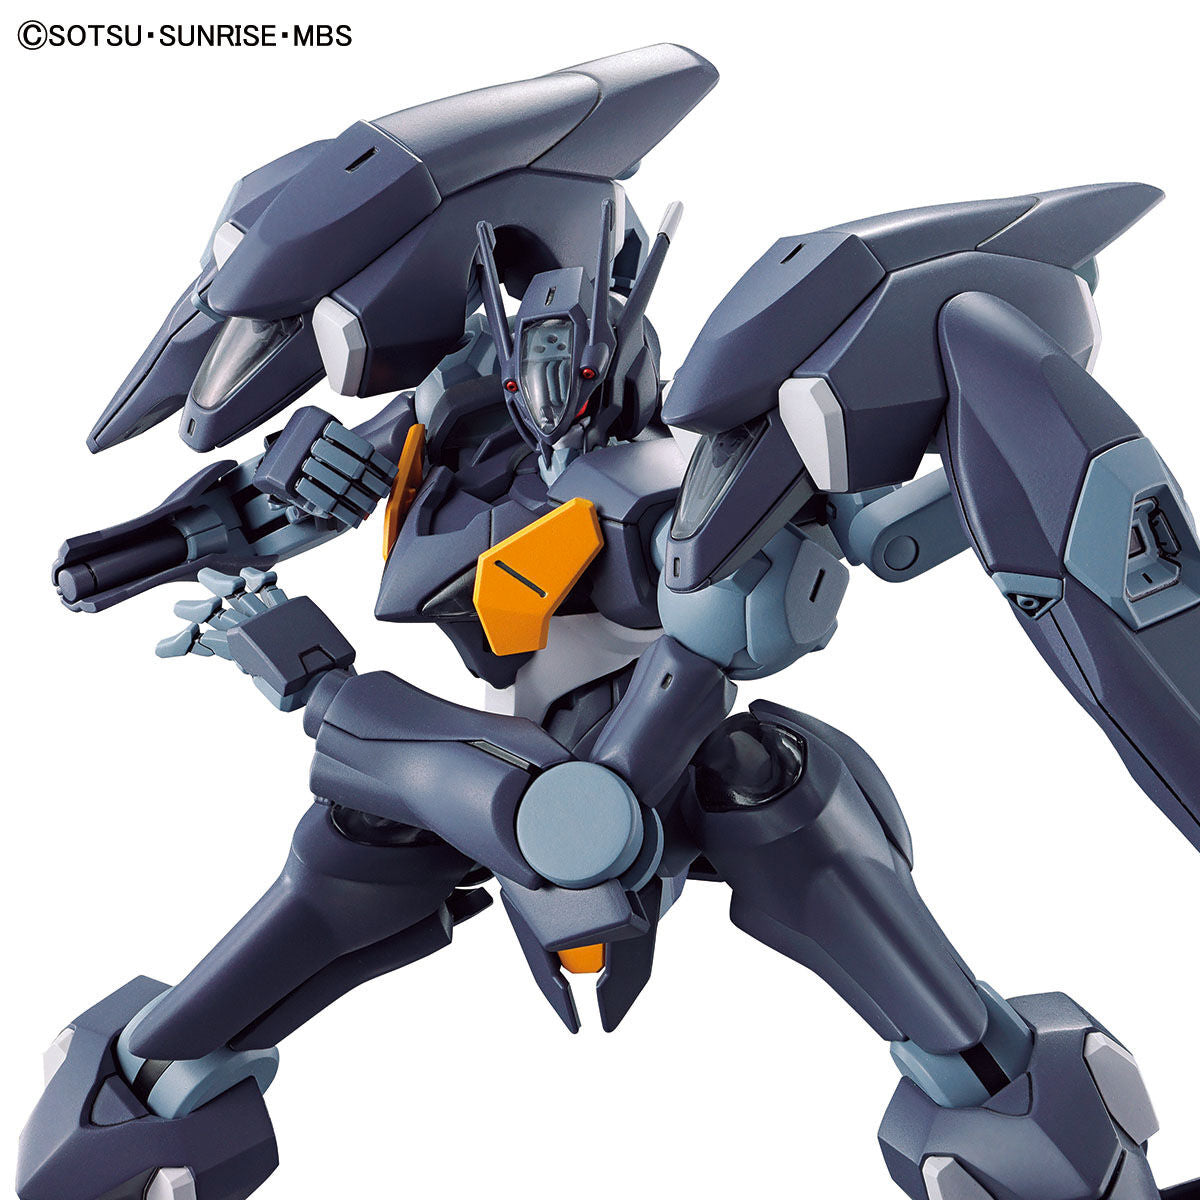 HGTWFM - FP/A-77 Gundam Pharact